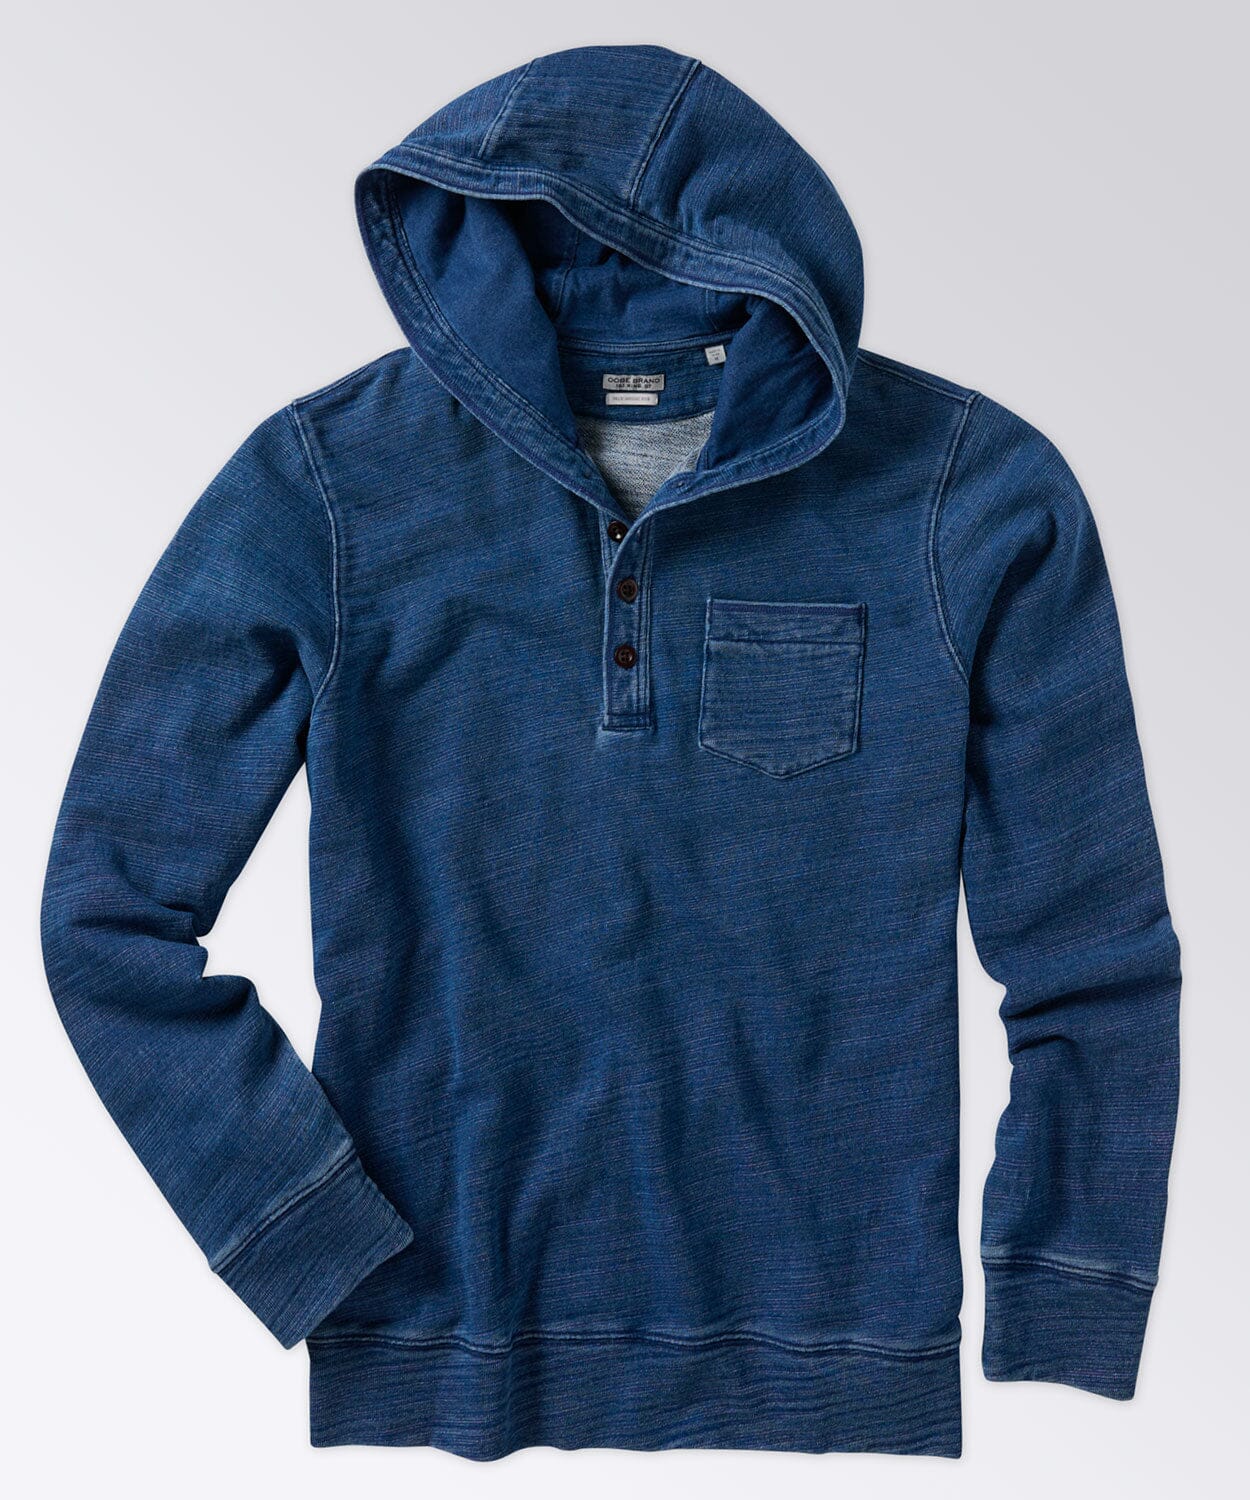 Indigo Blue Collection by OOBE Menswear BRAND | Premium